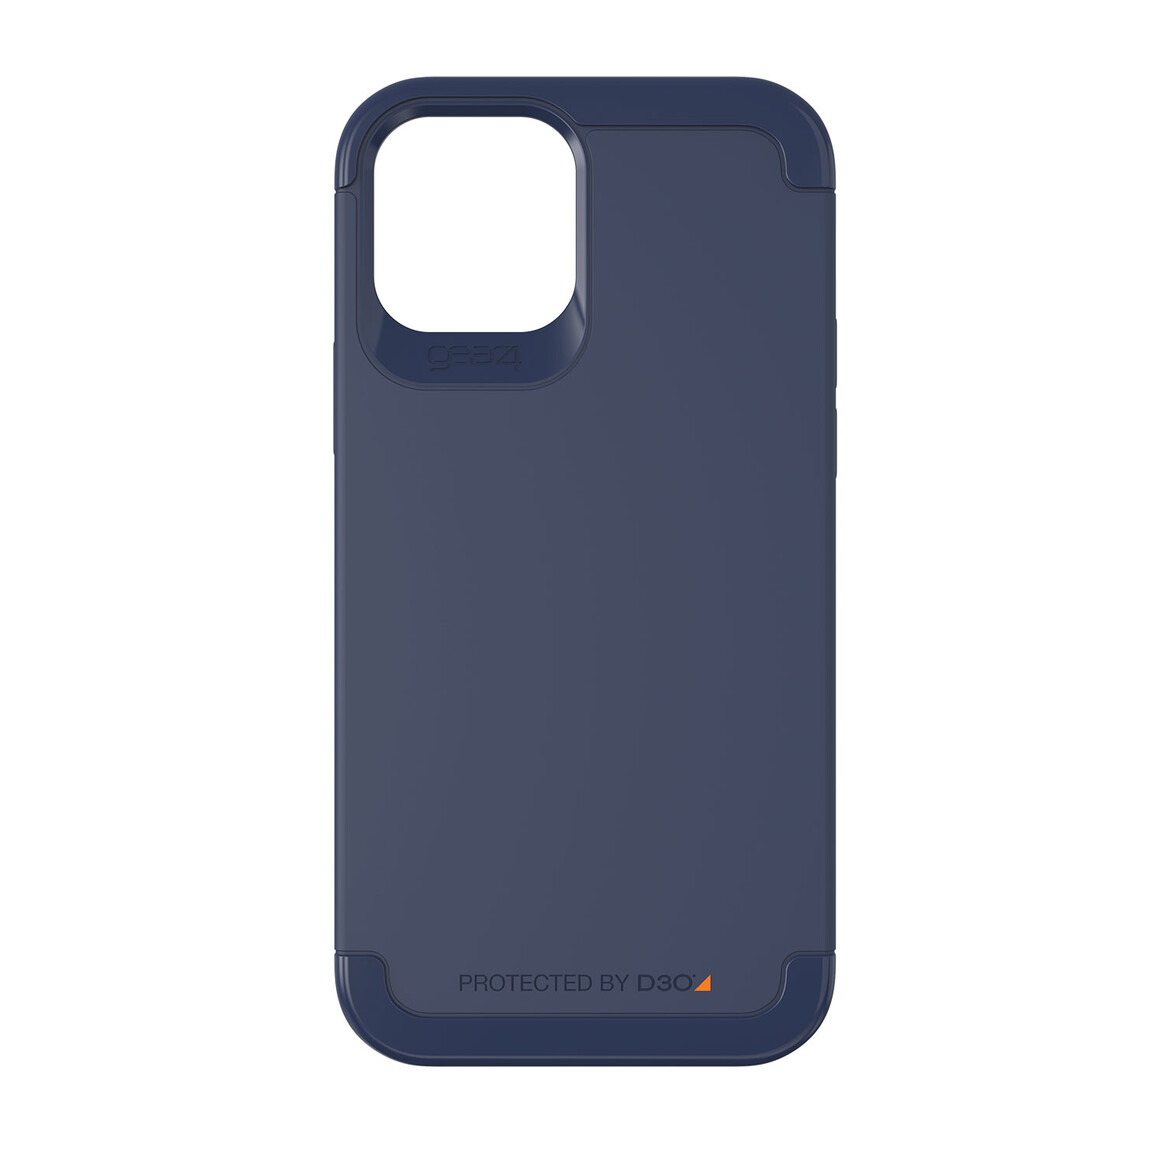 <h1>GEAR4 D3O Wembley Palette Case für iPhone 12/12 Pro, navy blau</h1>